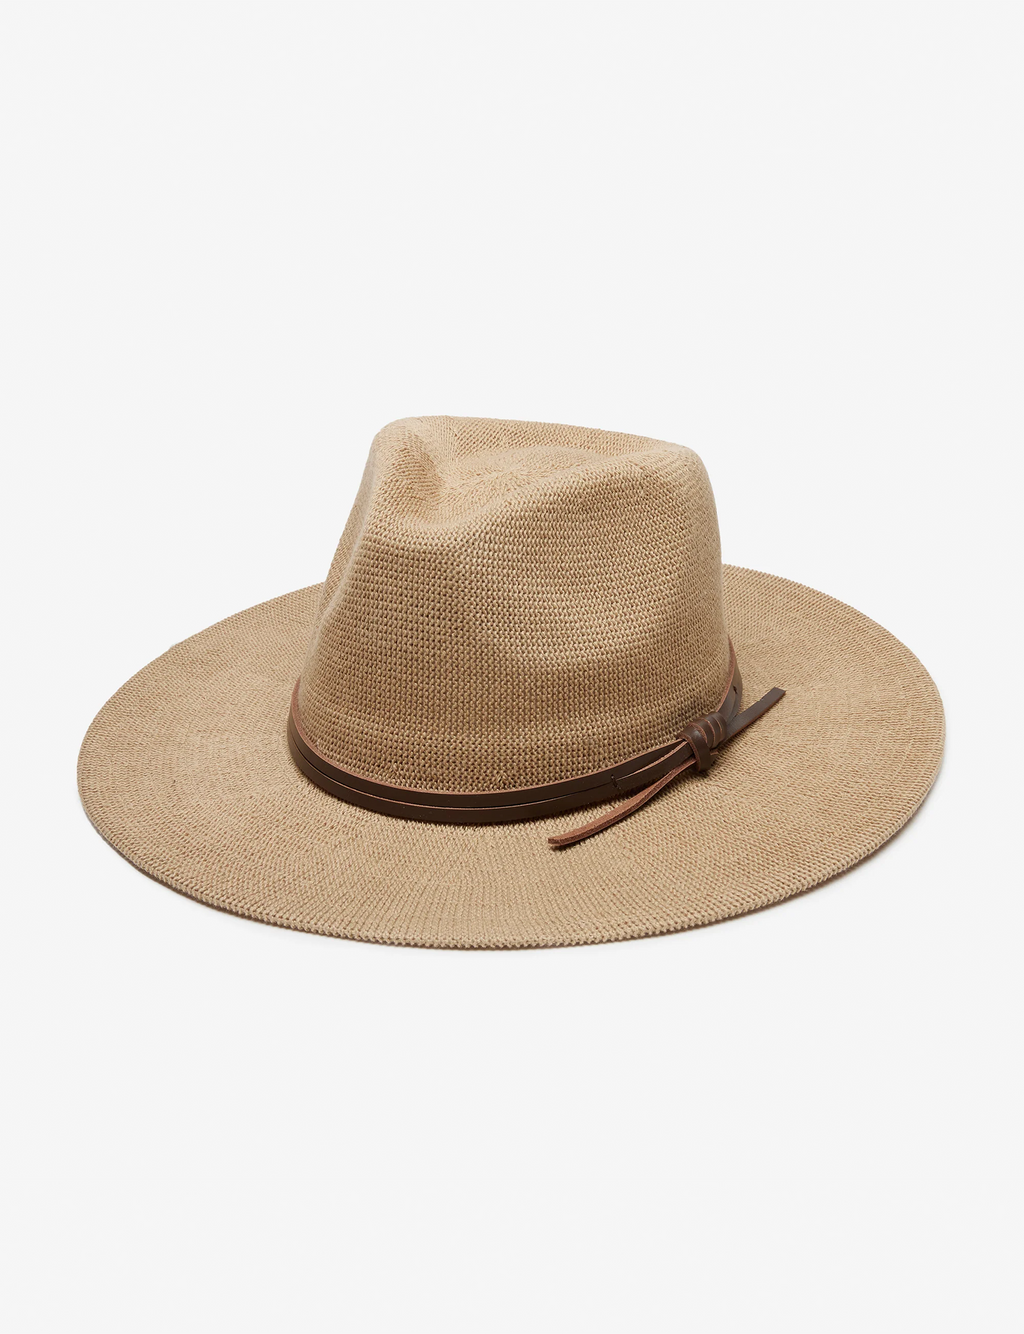 Hudson Straw Hat, Tan